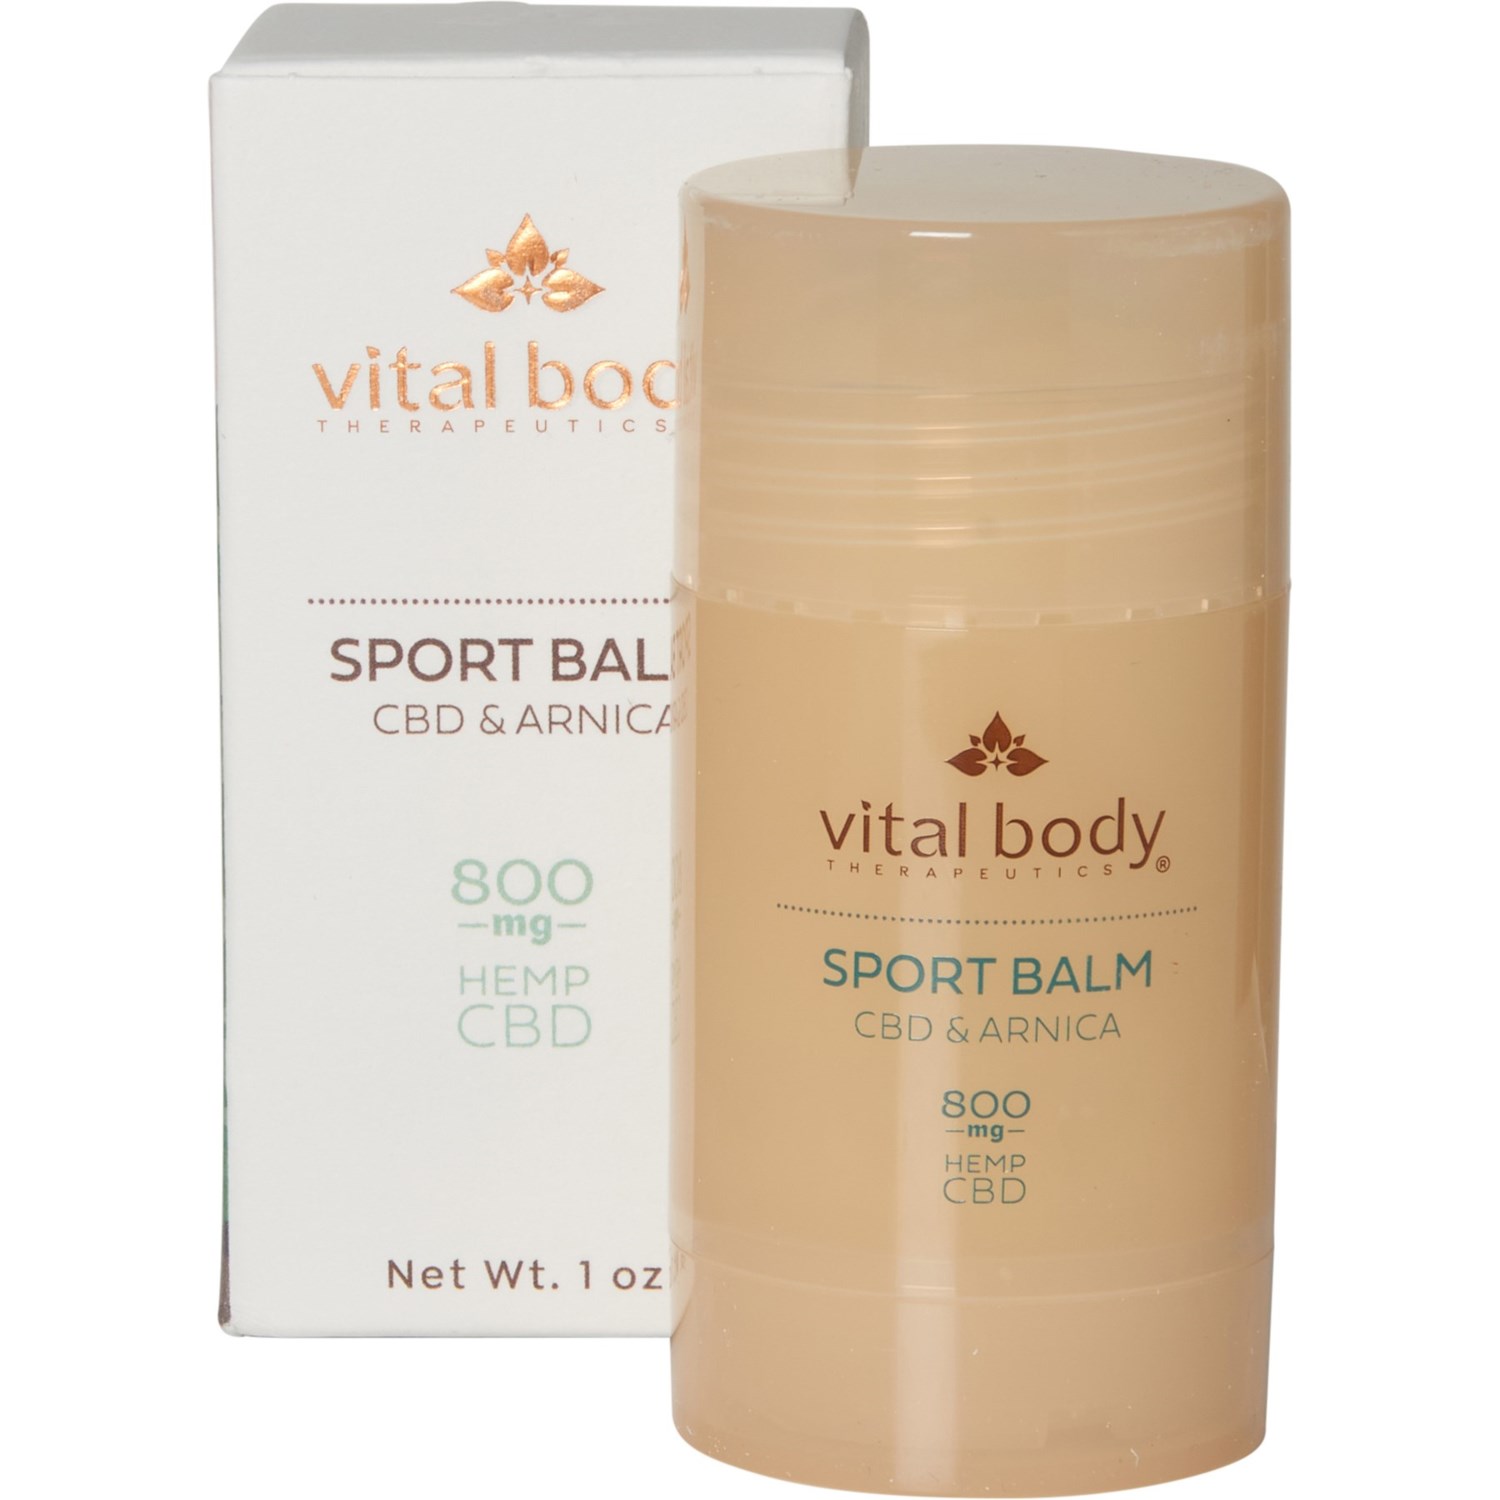 Vital Body CBD and Arnica Sport Balm - 1 oz., 800 mg